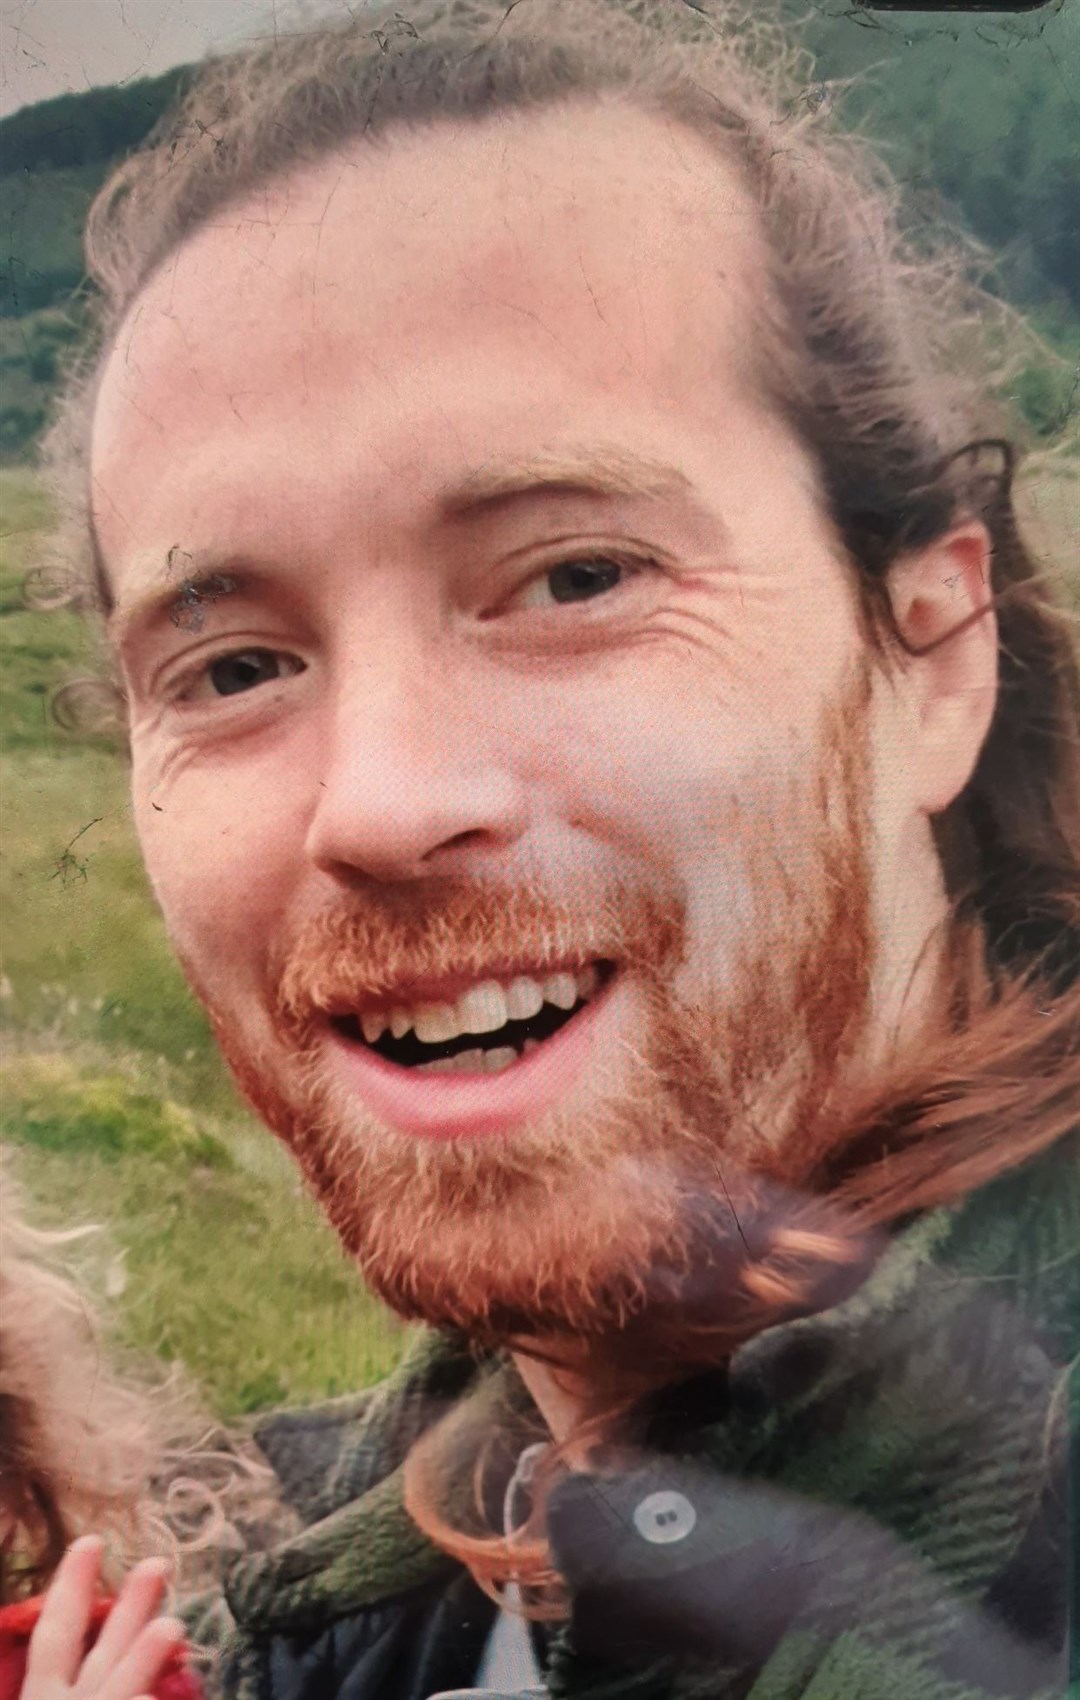 Missing man Finn Creaney (32) from Tain was last seen hillwalking between Altnaharra and Golspie.